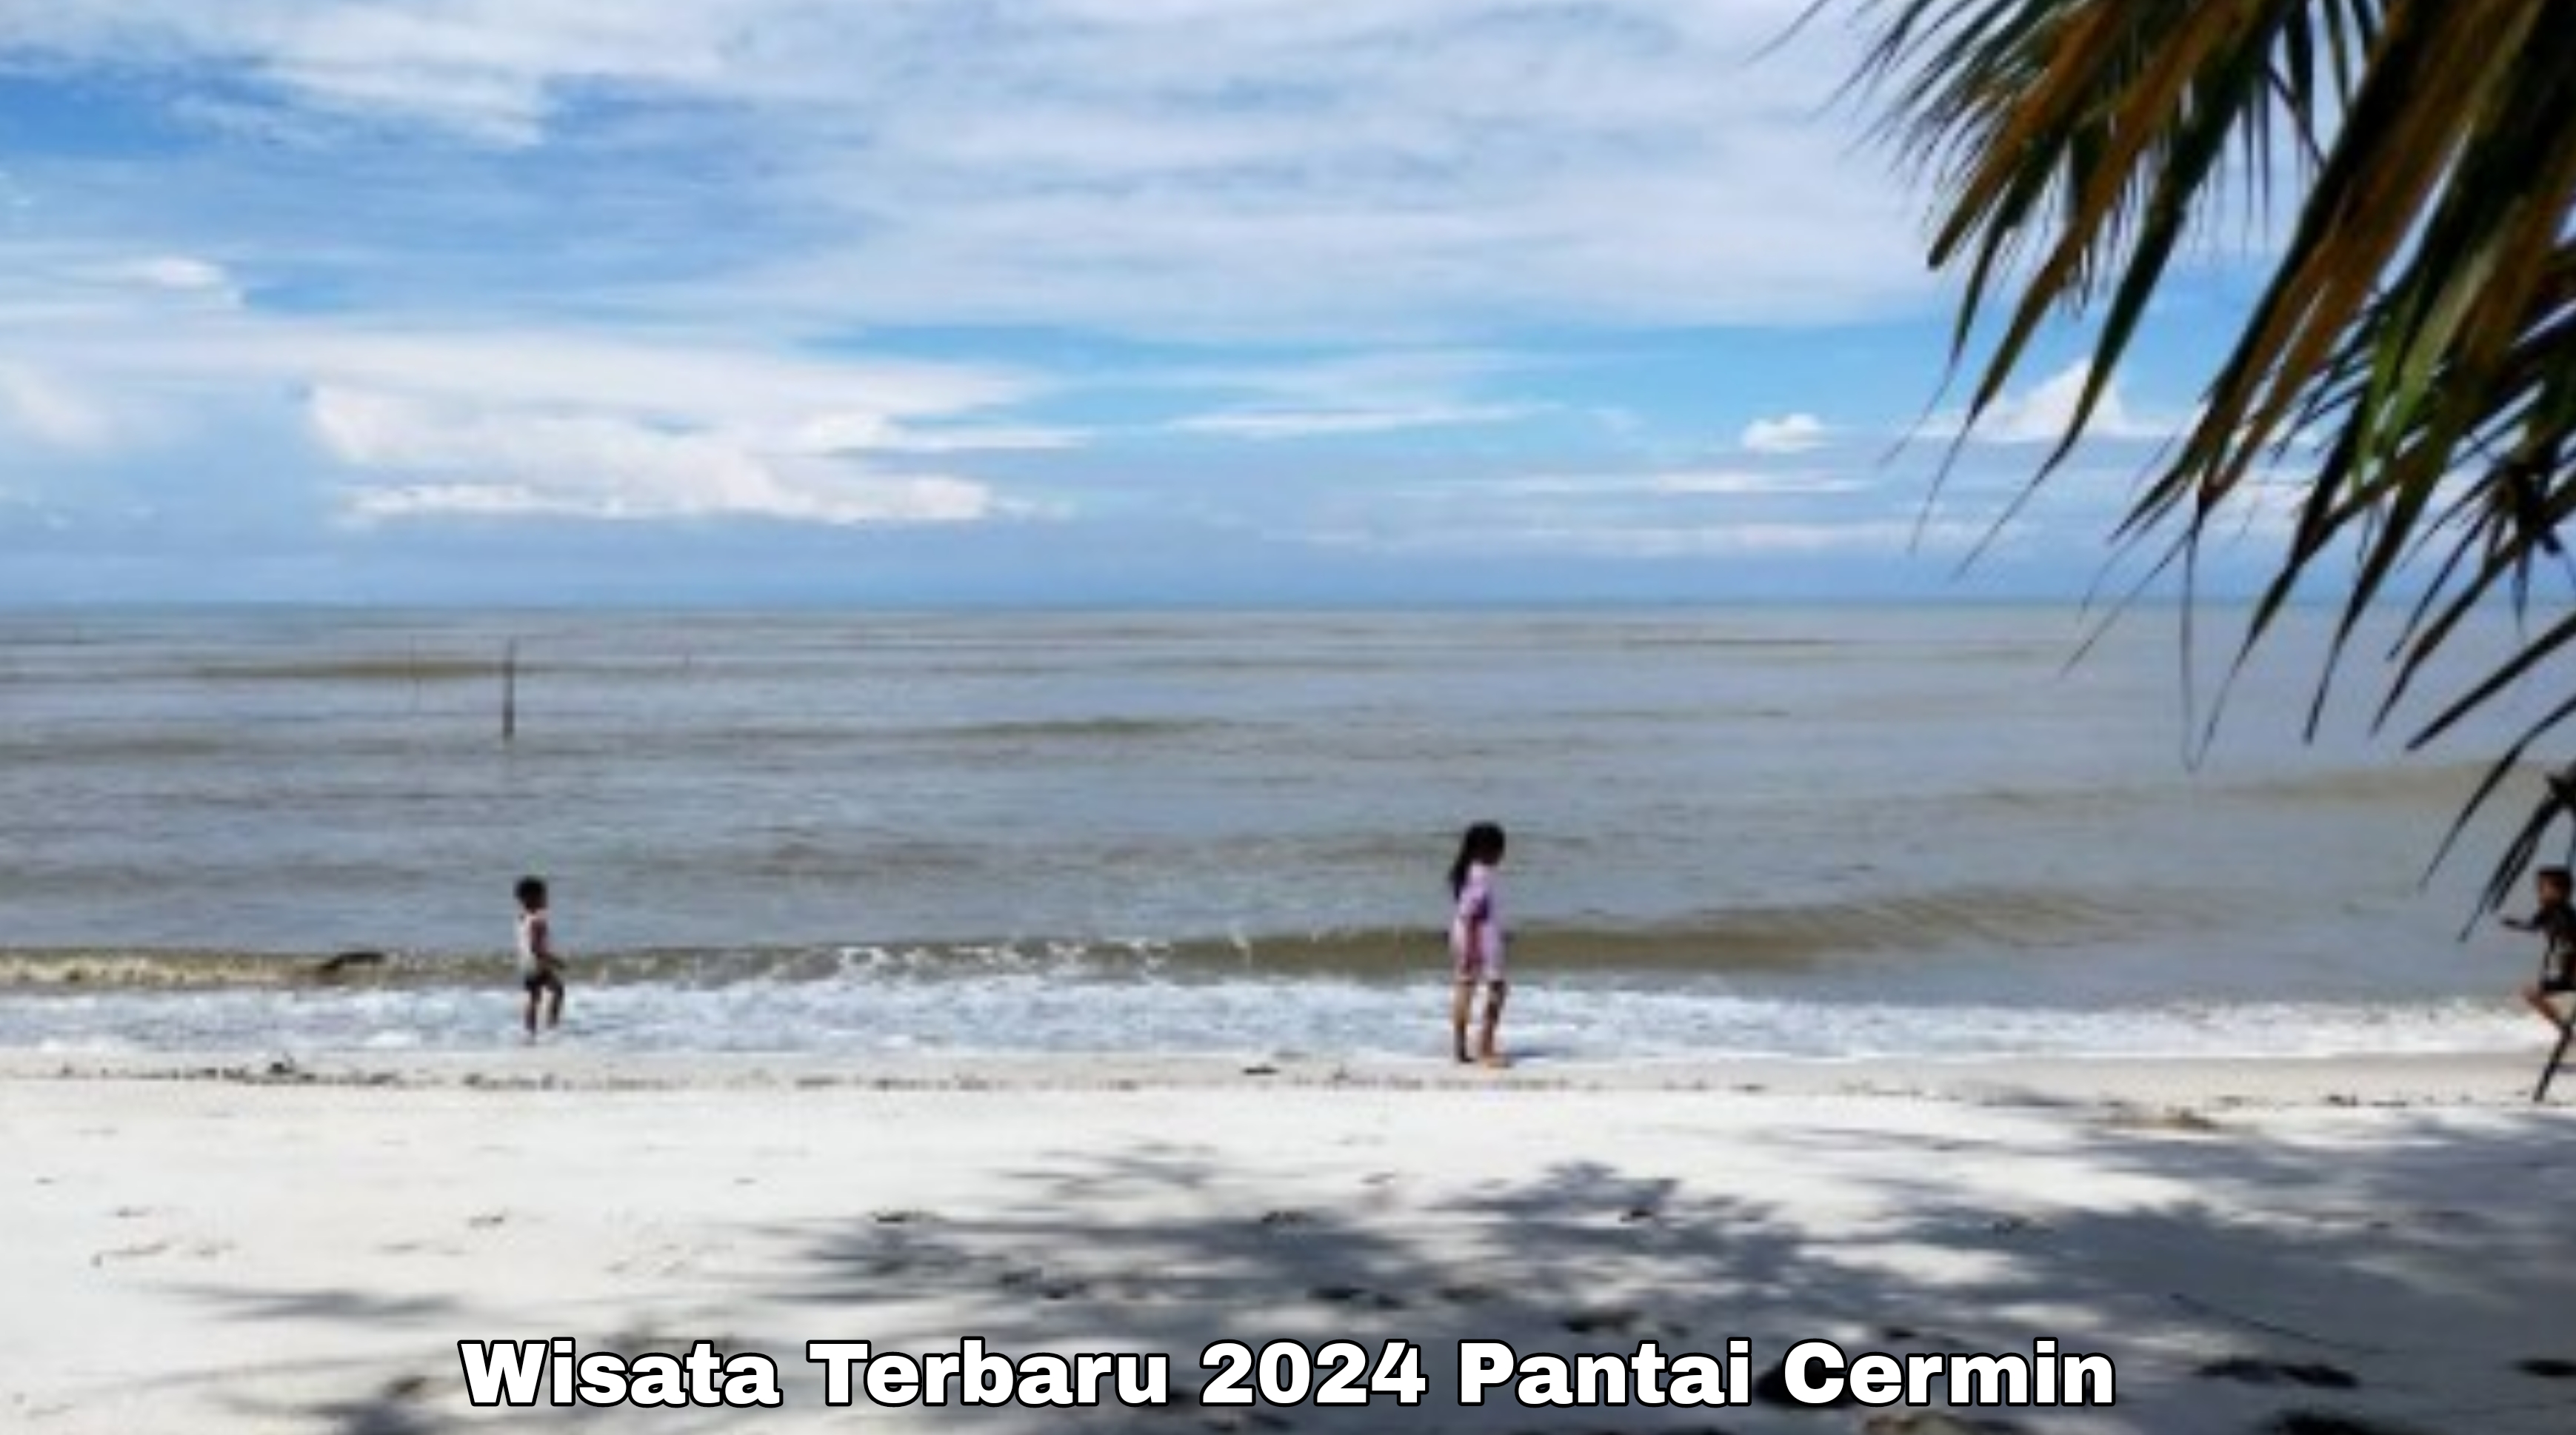 Pantai Cermin: Wisata Terbaru 2024 Medan dengan Berbagai Wahana Permainan Air Menantang